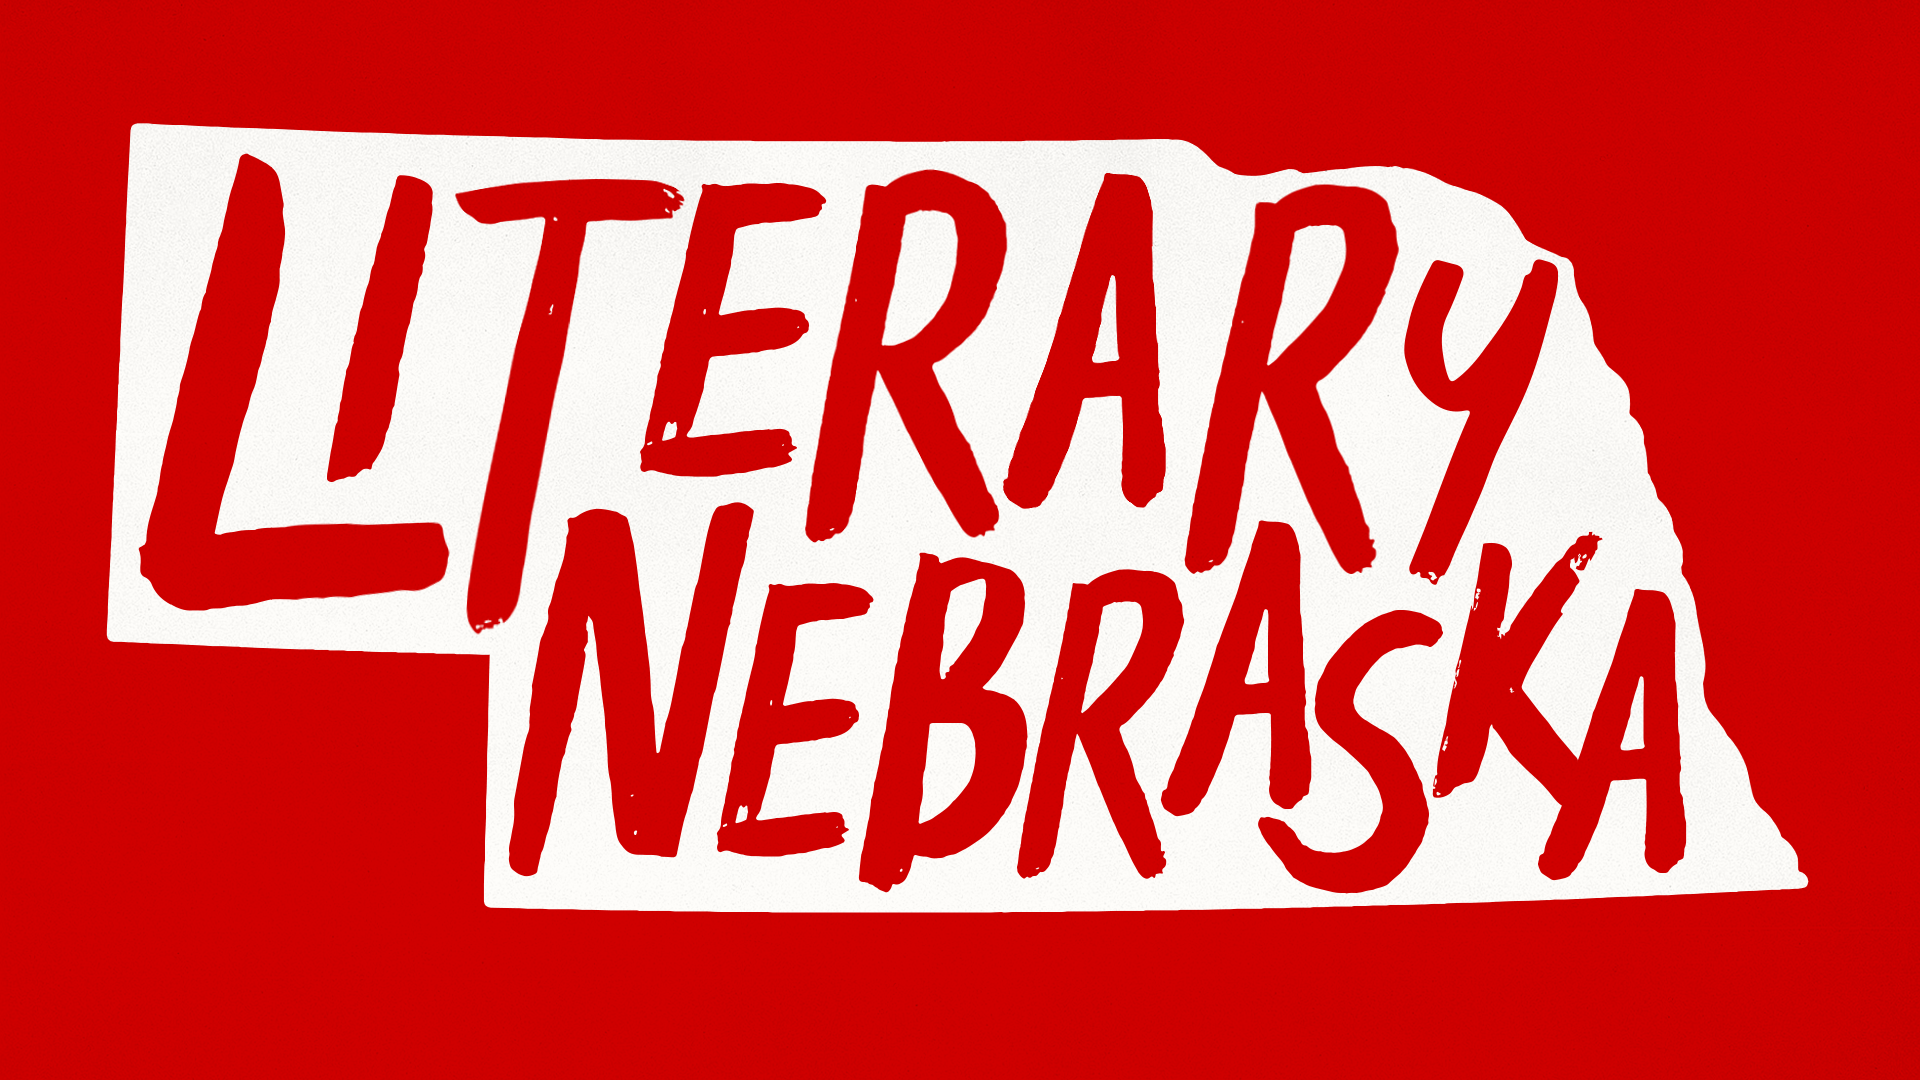 Literary Nebraska logo - handwritten text inside state silhouette; links to news story